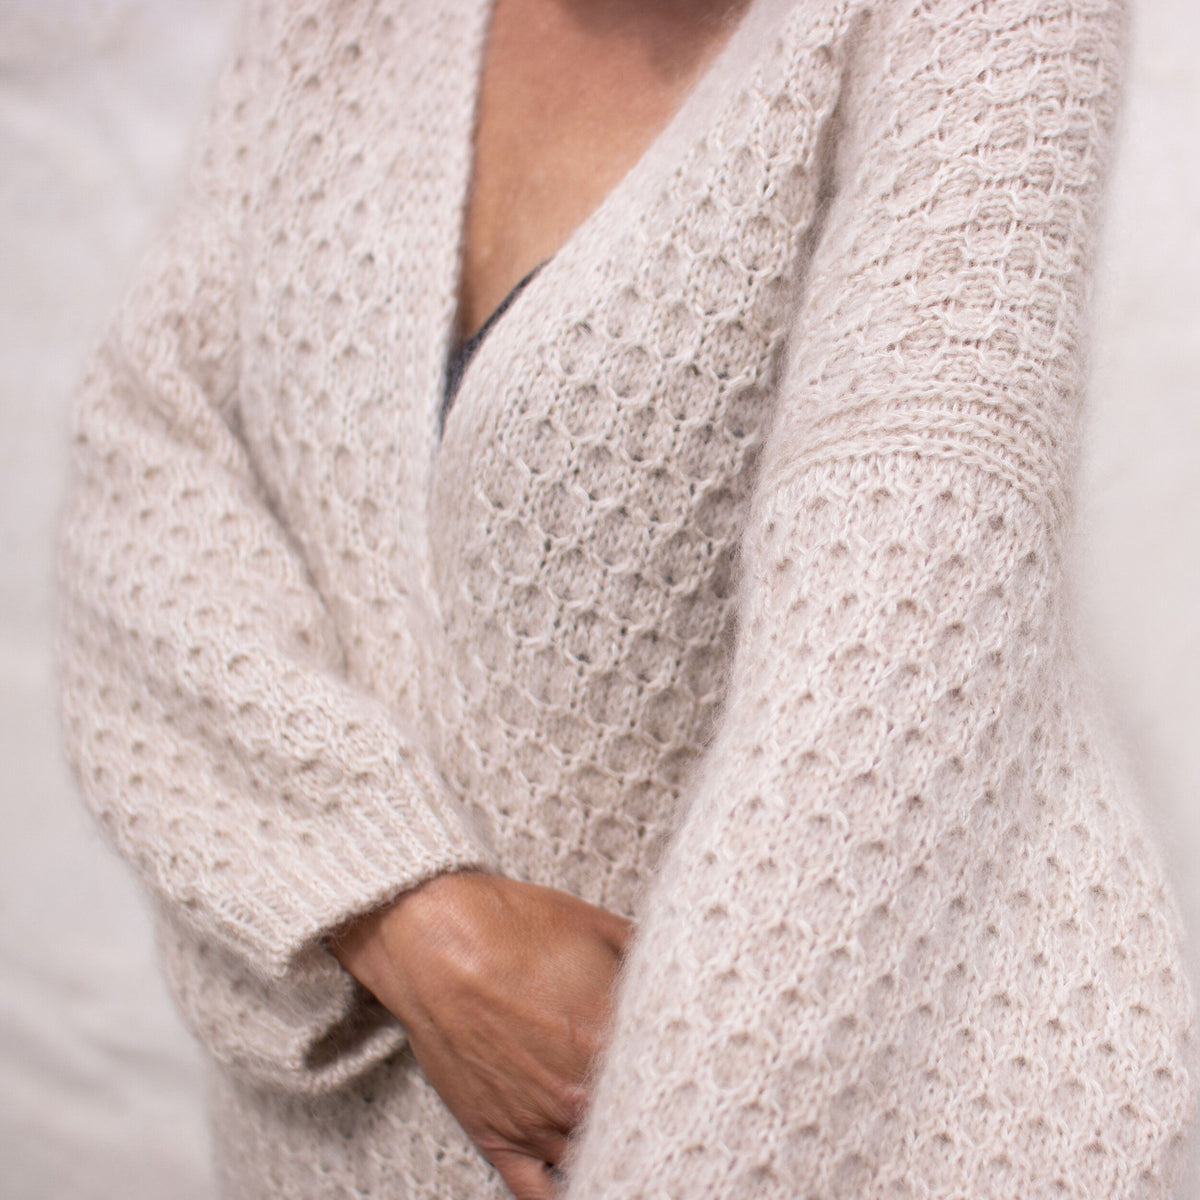 Cardi V-neck sweater by Anne Ventzel, No 2 + Silk mohair yarn kit (ex  pattern)